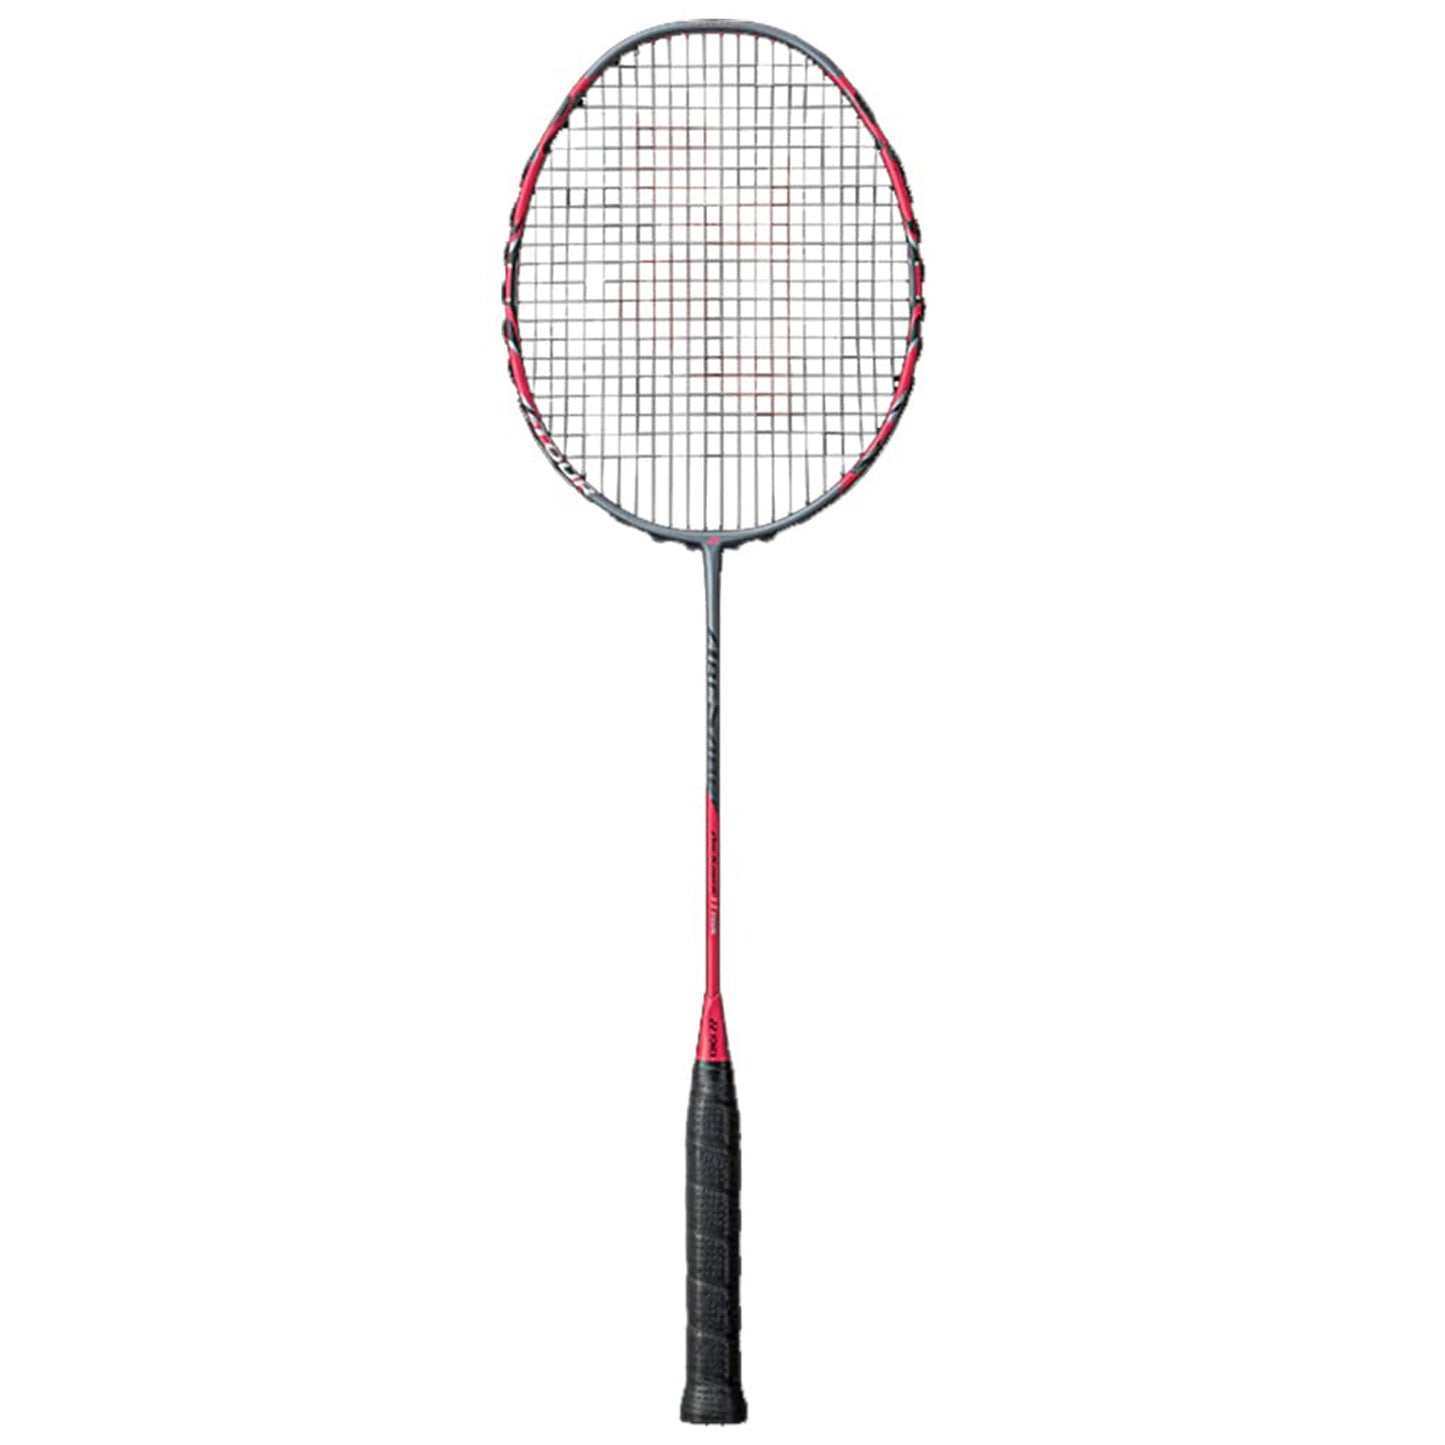 Yonex Arcsaber 11 Pro Badminton Racquet - Grey/Pure Red - Best Price online Prokicksports.com